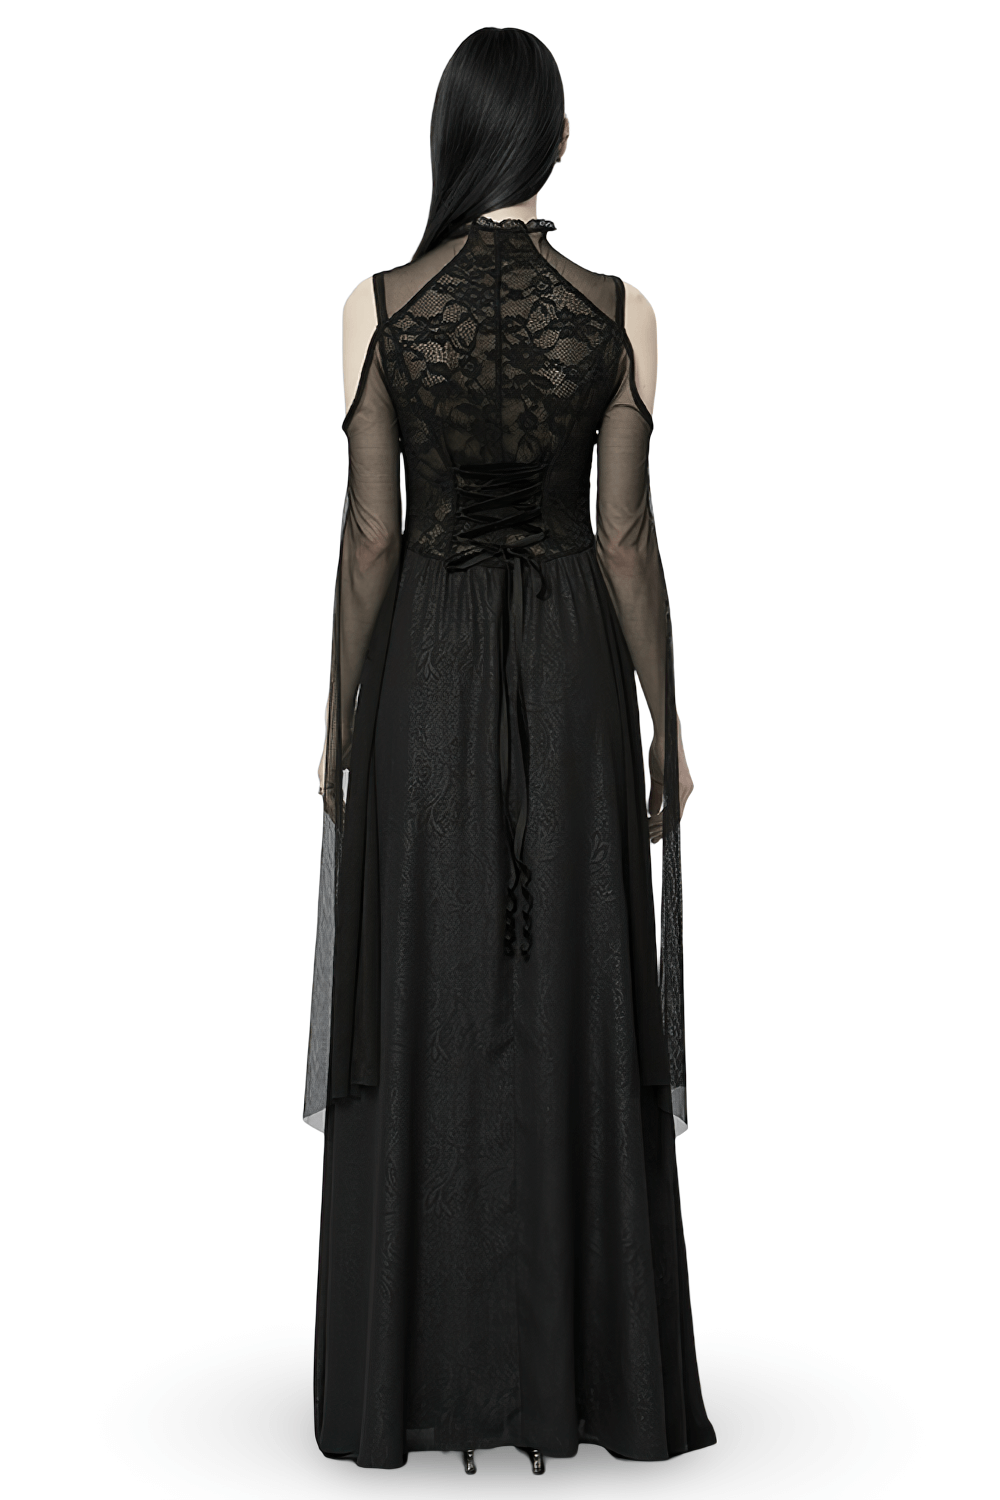 Elegant Black Lace Off the Shoulder Long Party Dress